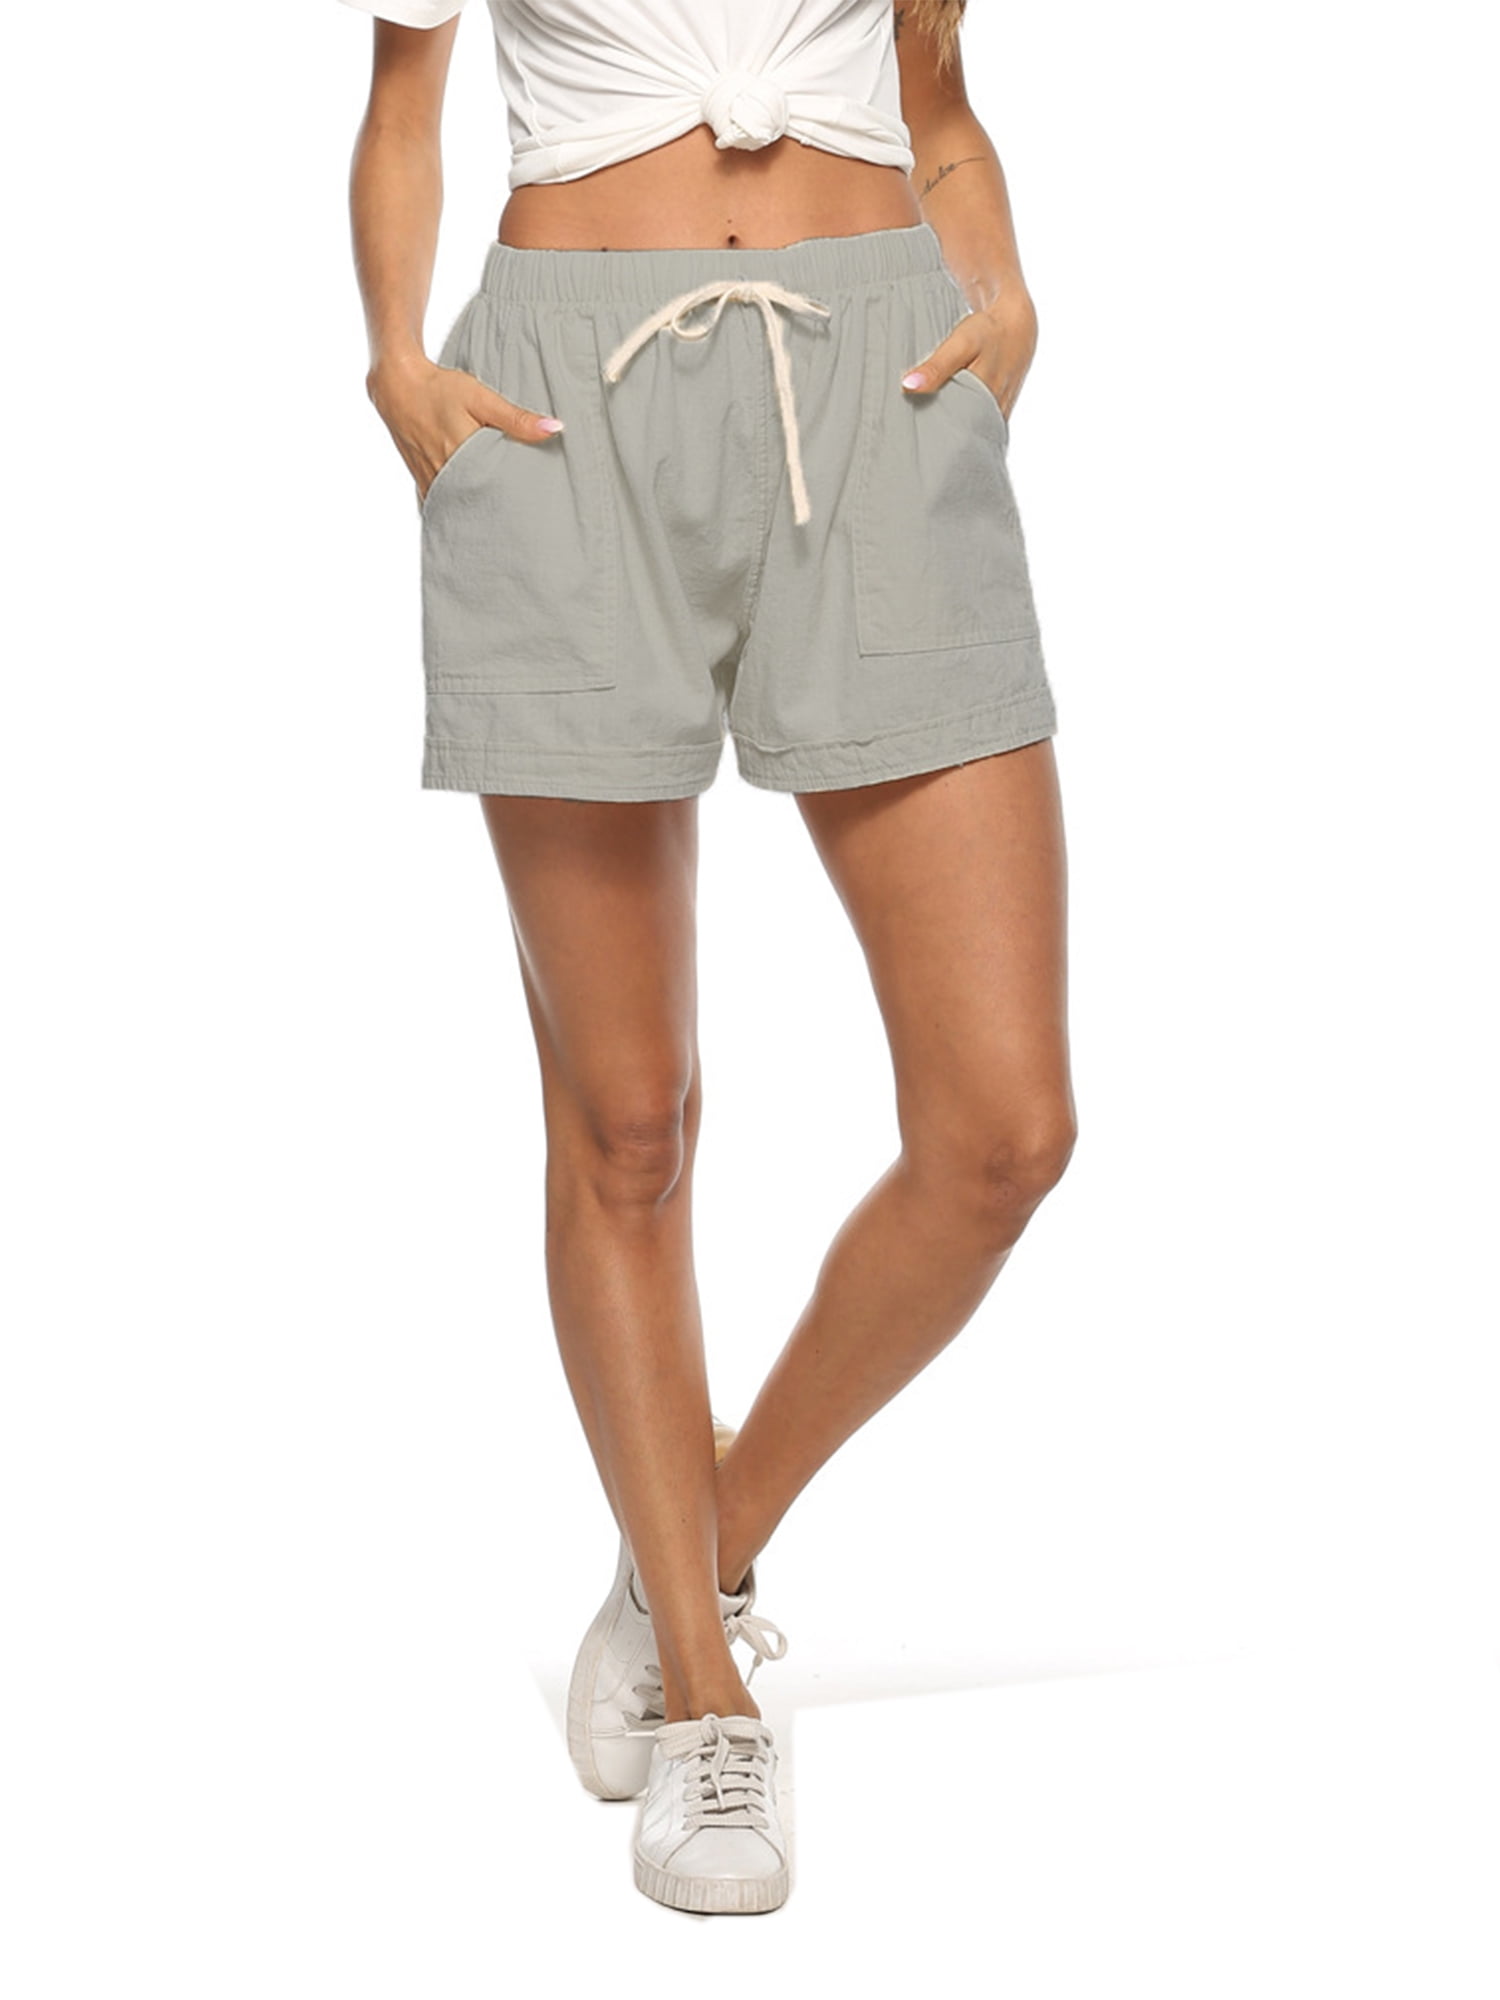 Damen Capri Jeans Shorts Super Stretch Kurze Chino Hose Big Size Bermuda Pants